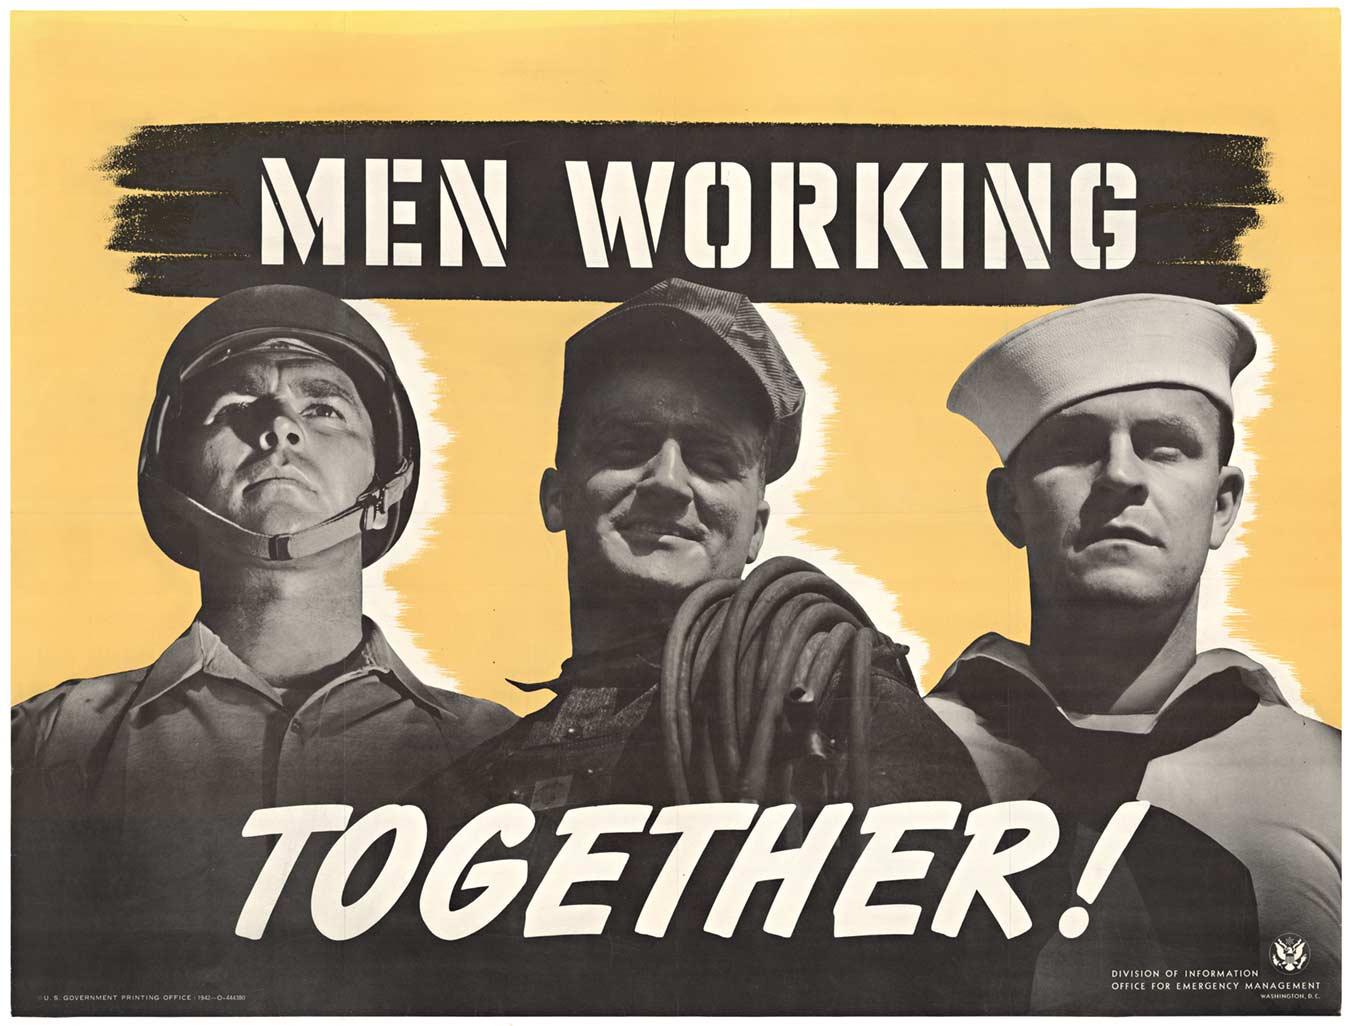 Unknown Portrait Print - Original "Men Working Together" vintage 1942 poster  horizontal  WWII